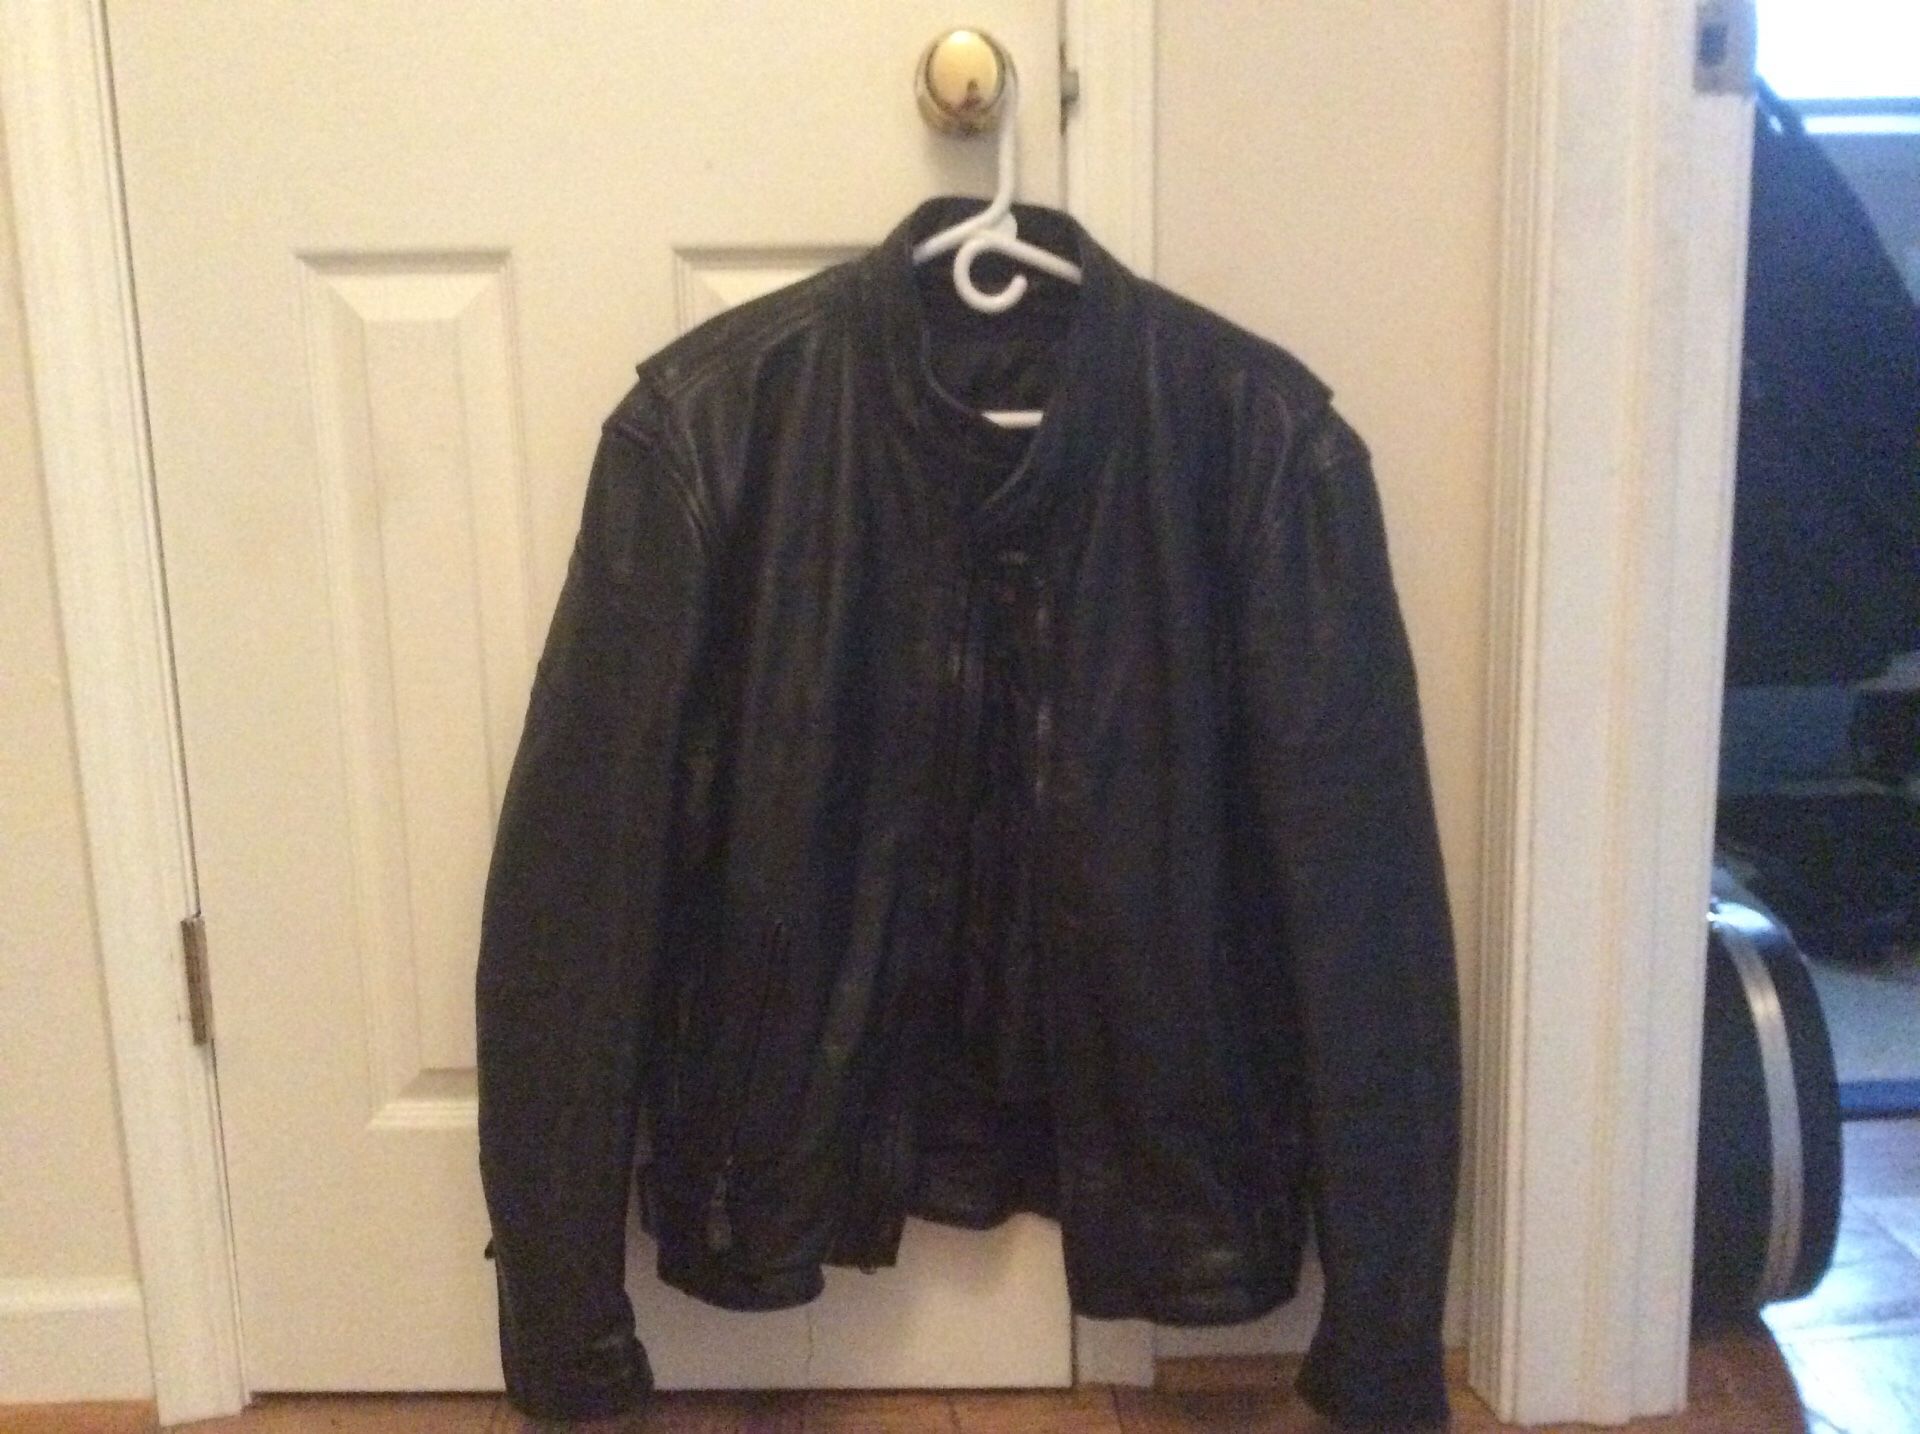 Motorcycle leather jacket